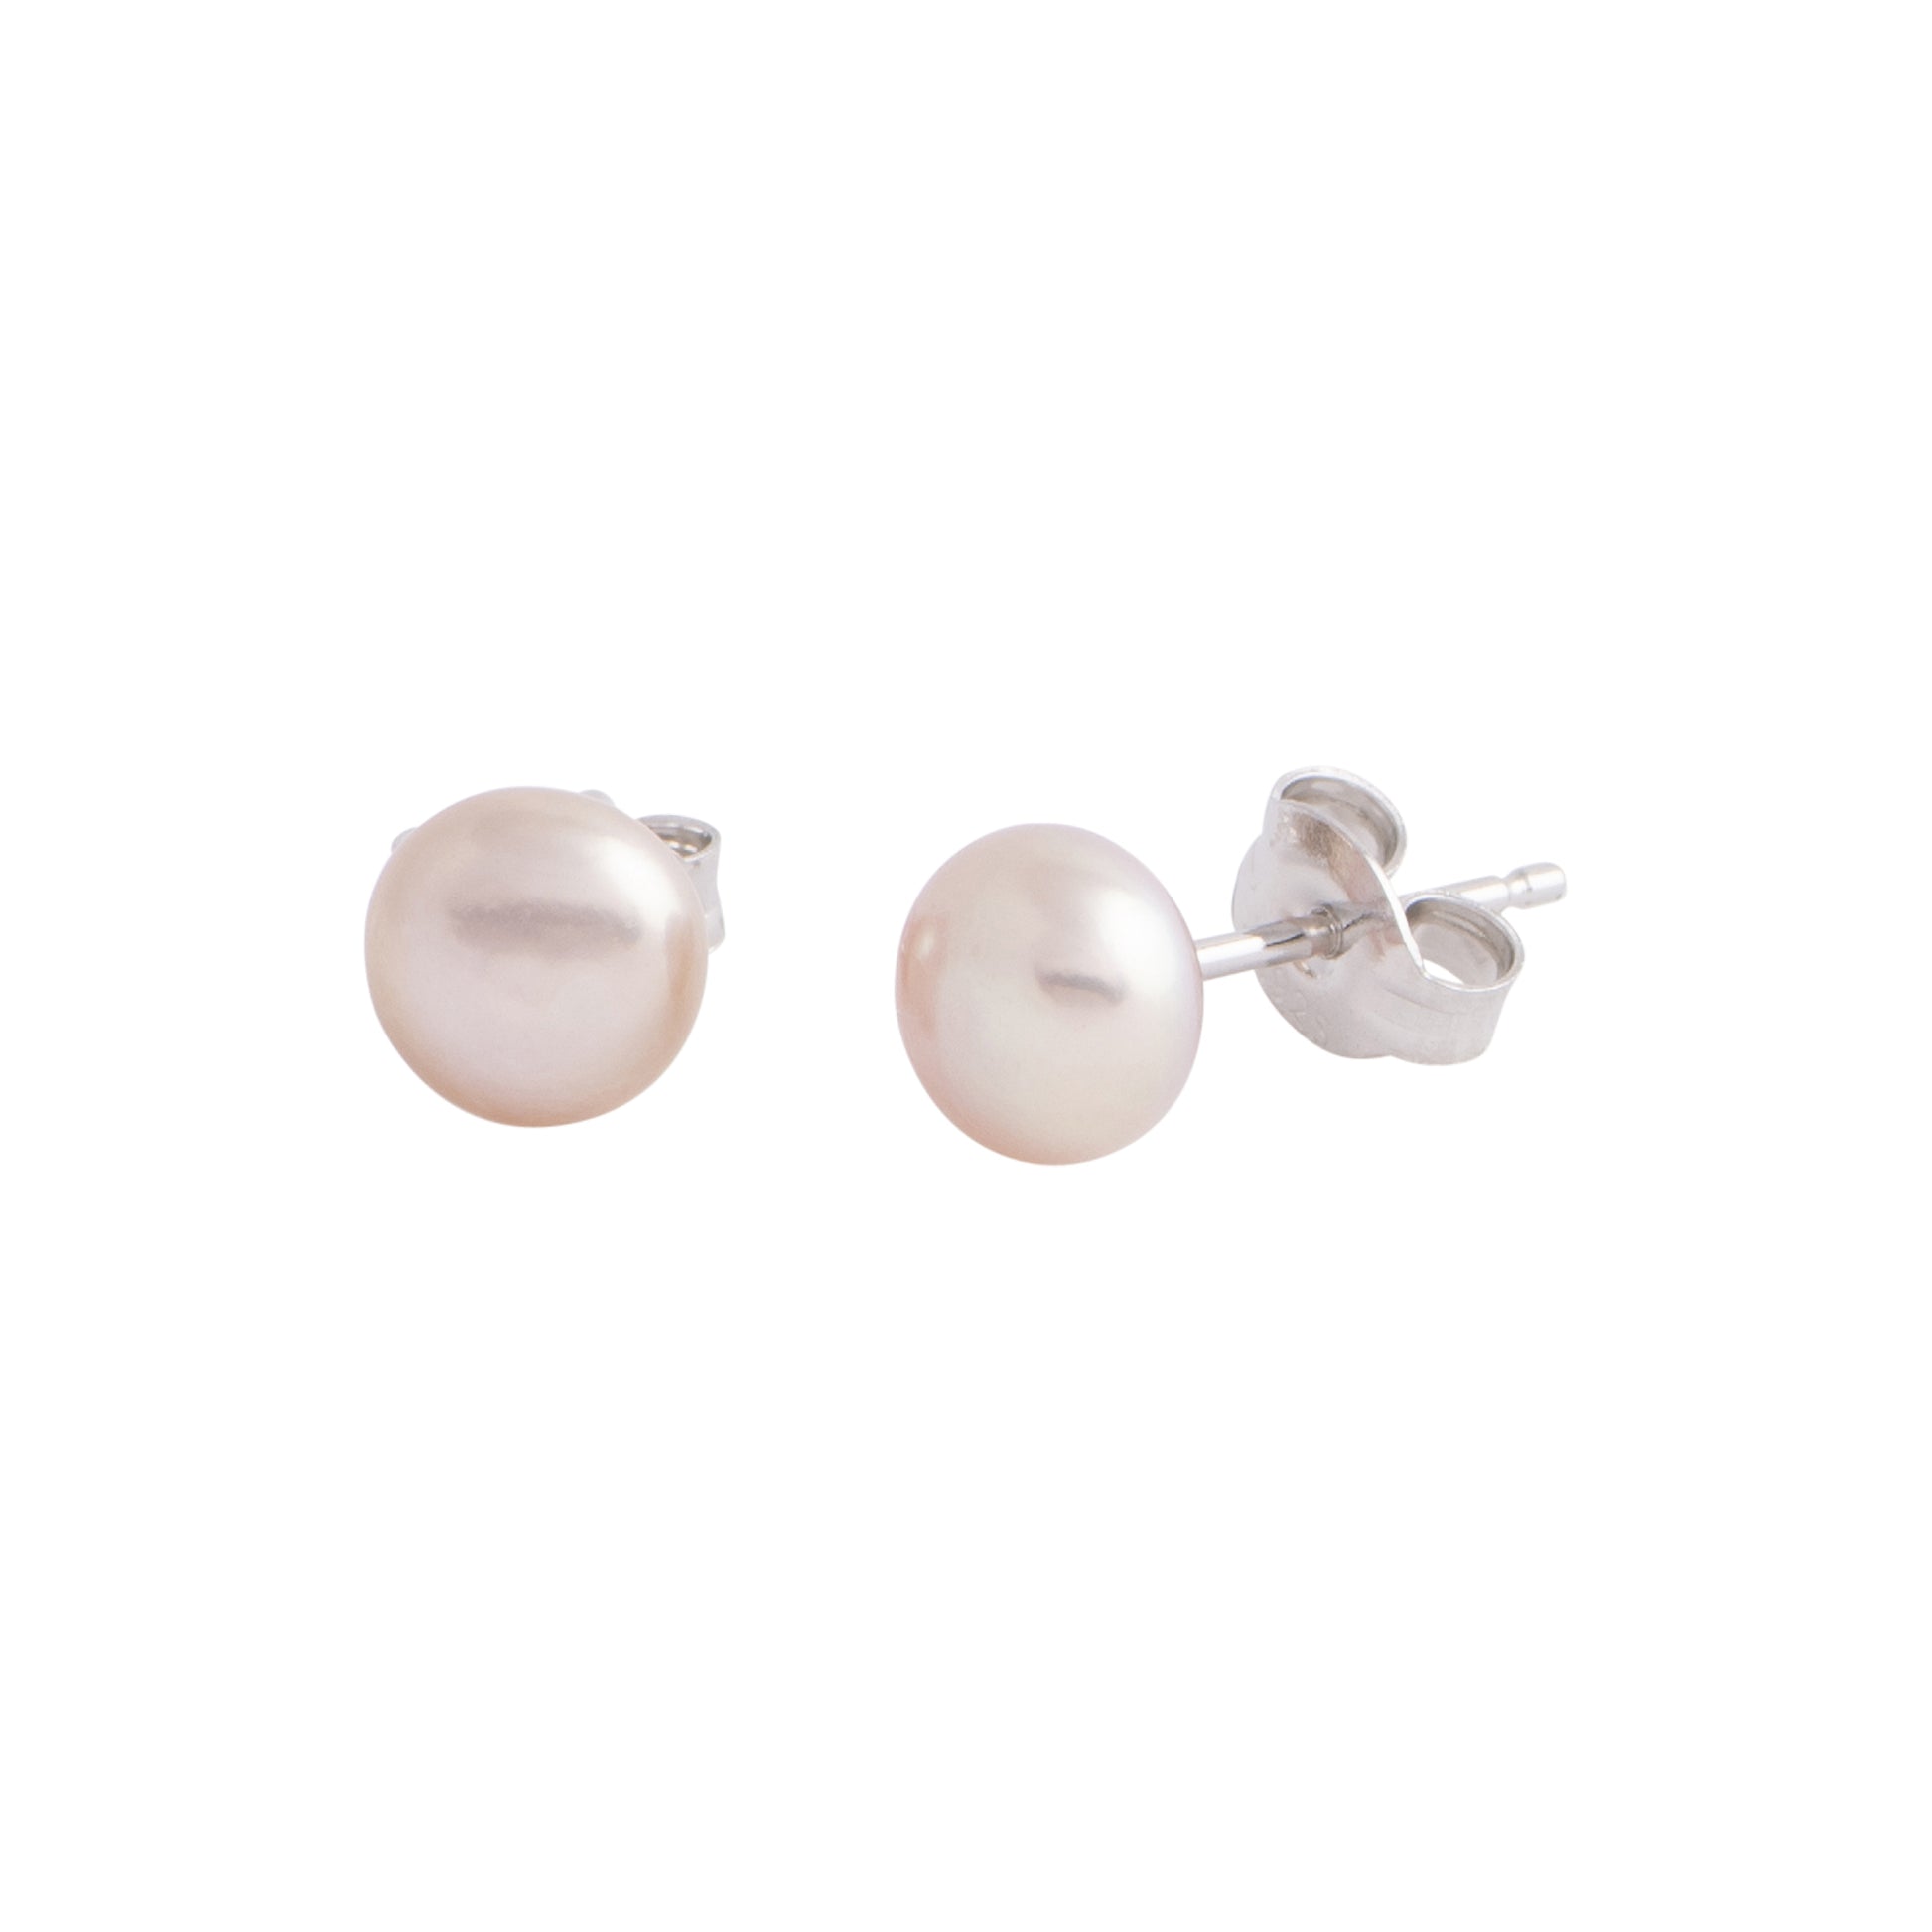 Alika - Small (5mm) pearl nickle-free earrings (Natural pearls)